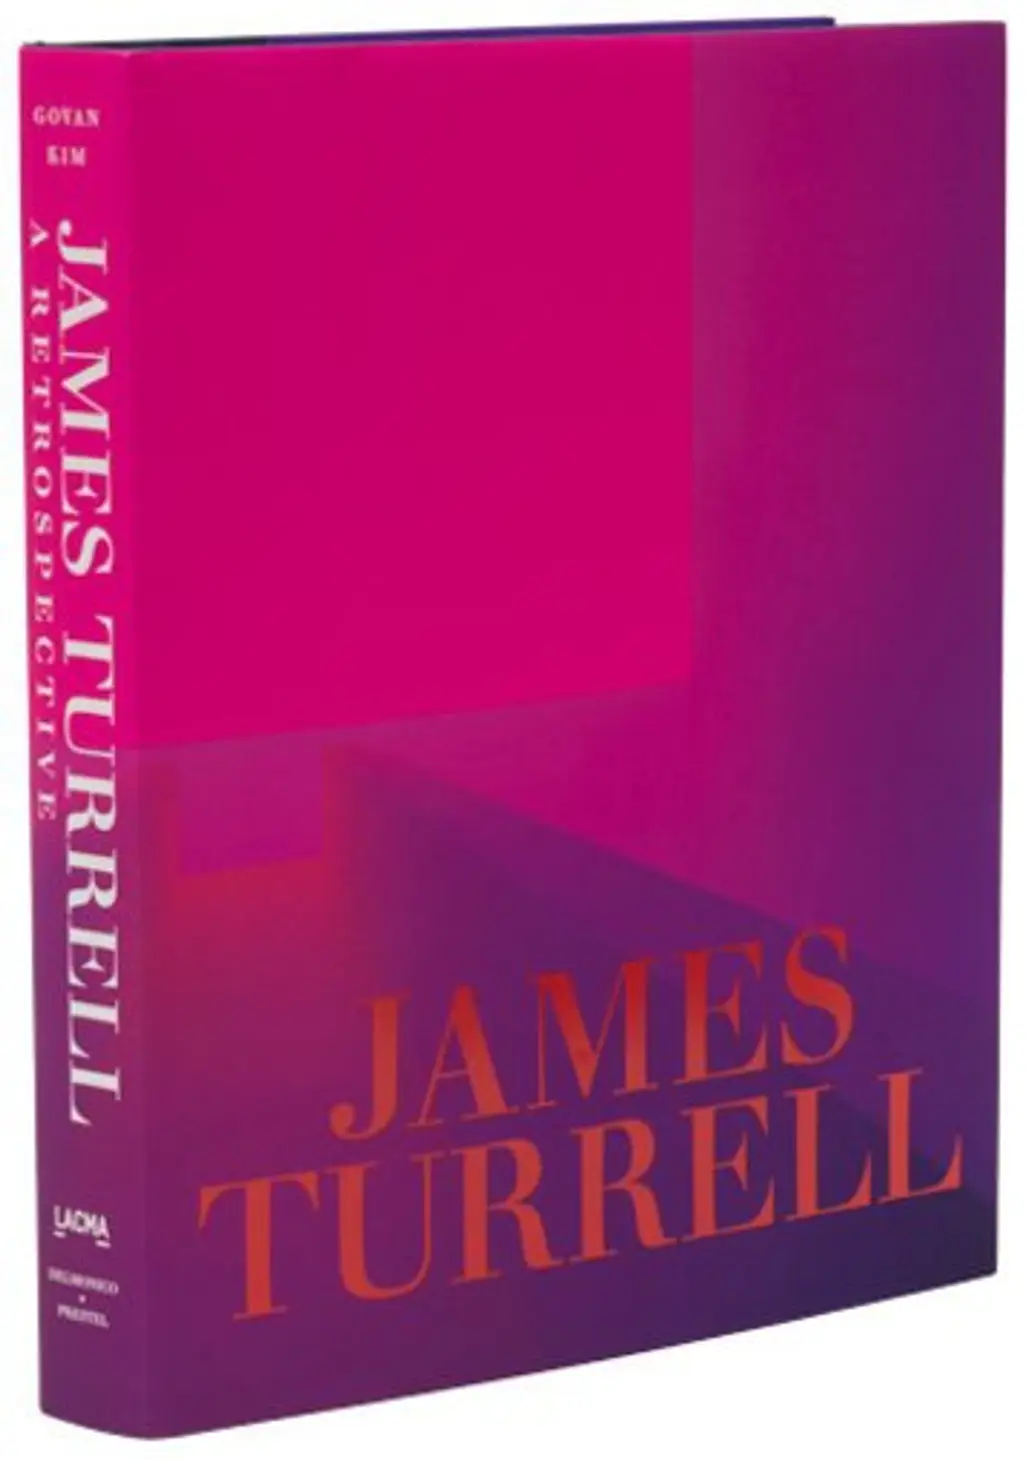 James Turrell: a Retrospective